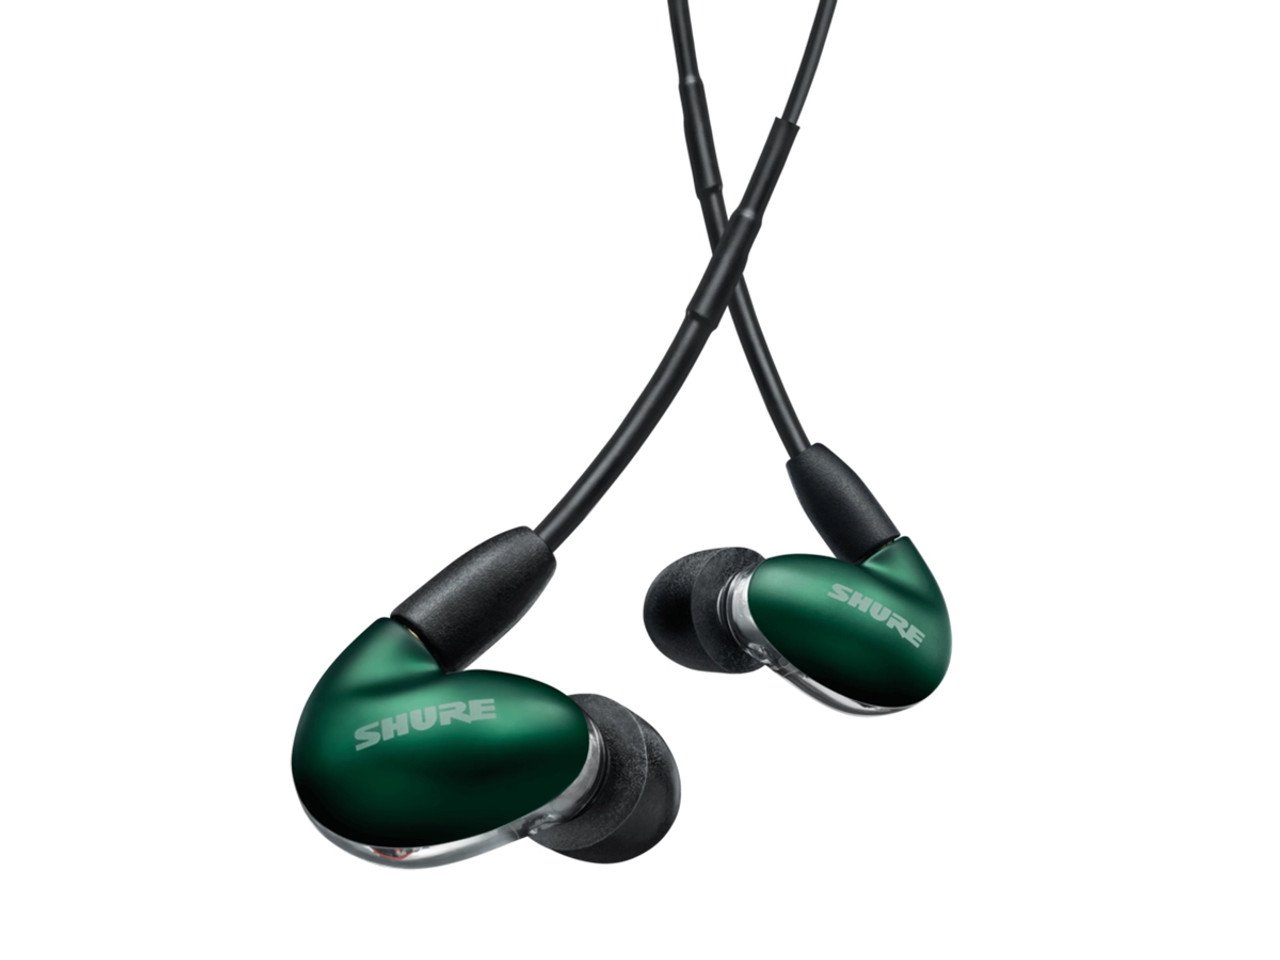 Shure SE215 Pro Sound Isolation Earphones Green